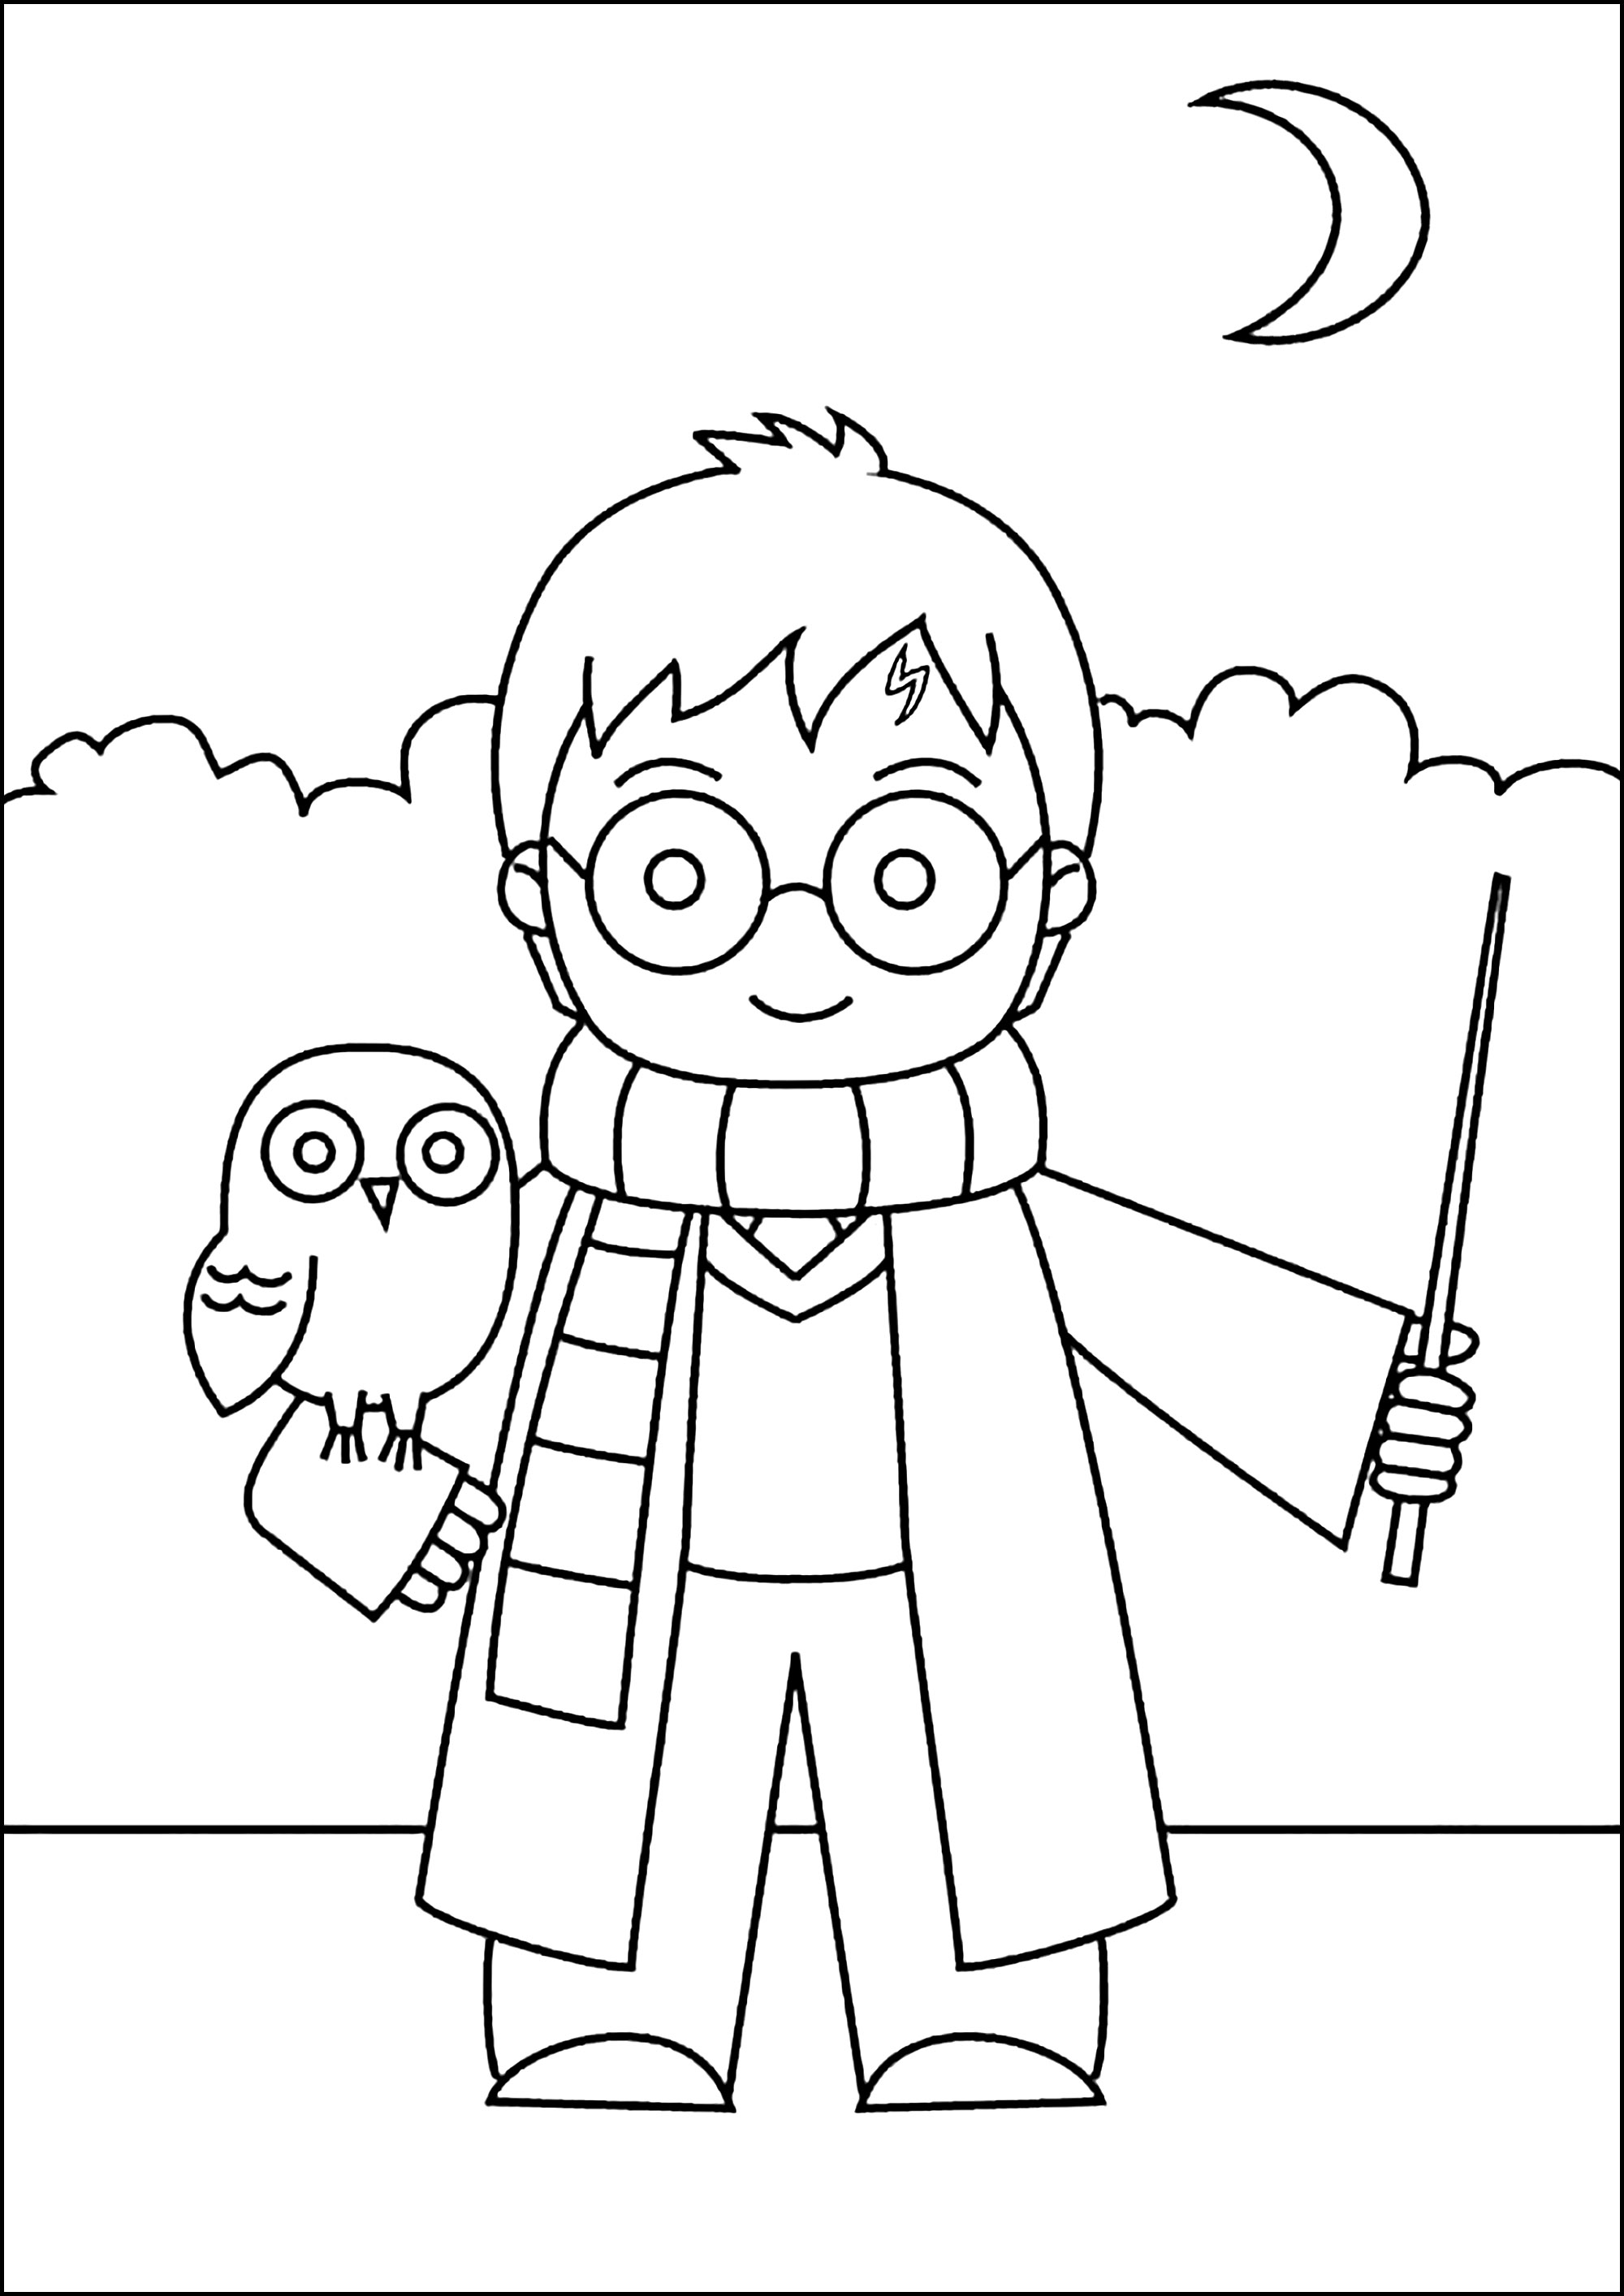 Drawing Harry Potter | drawholic - YouTube-saigonsouth.com.vn